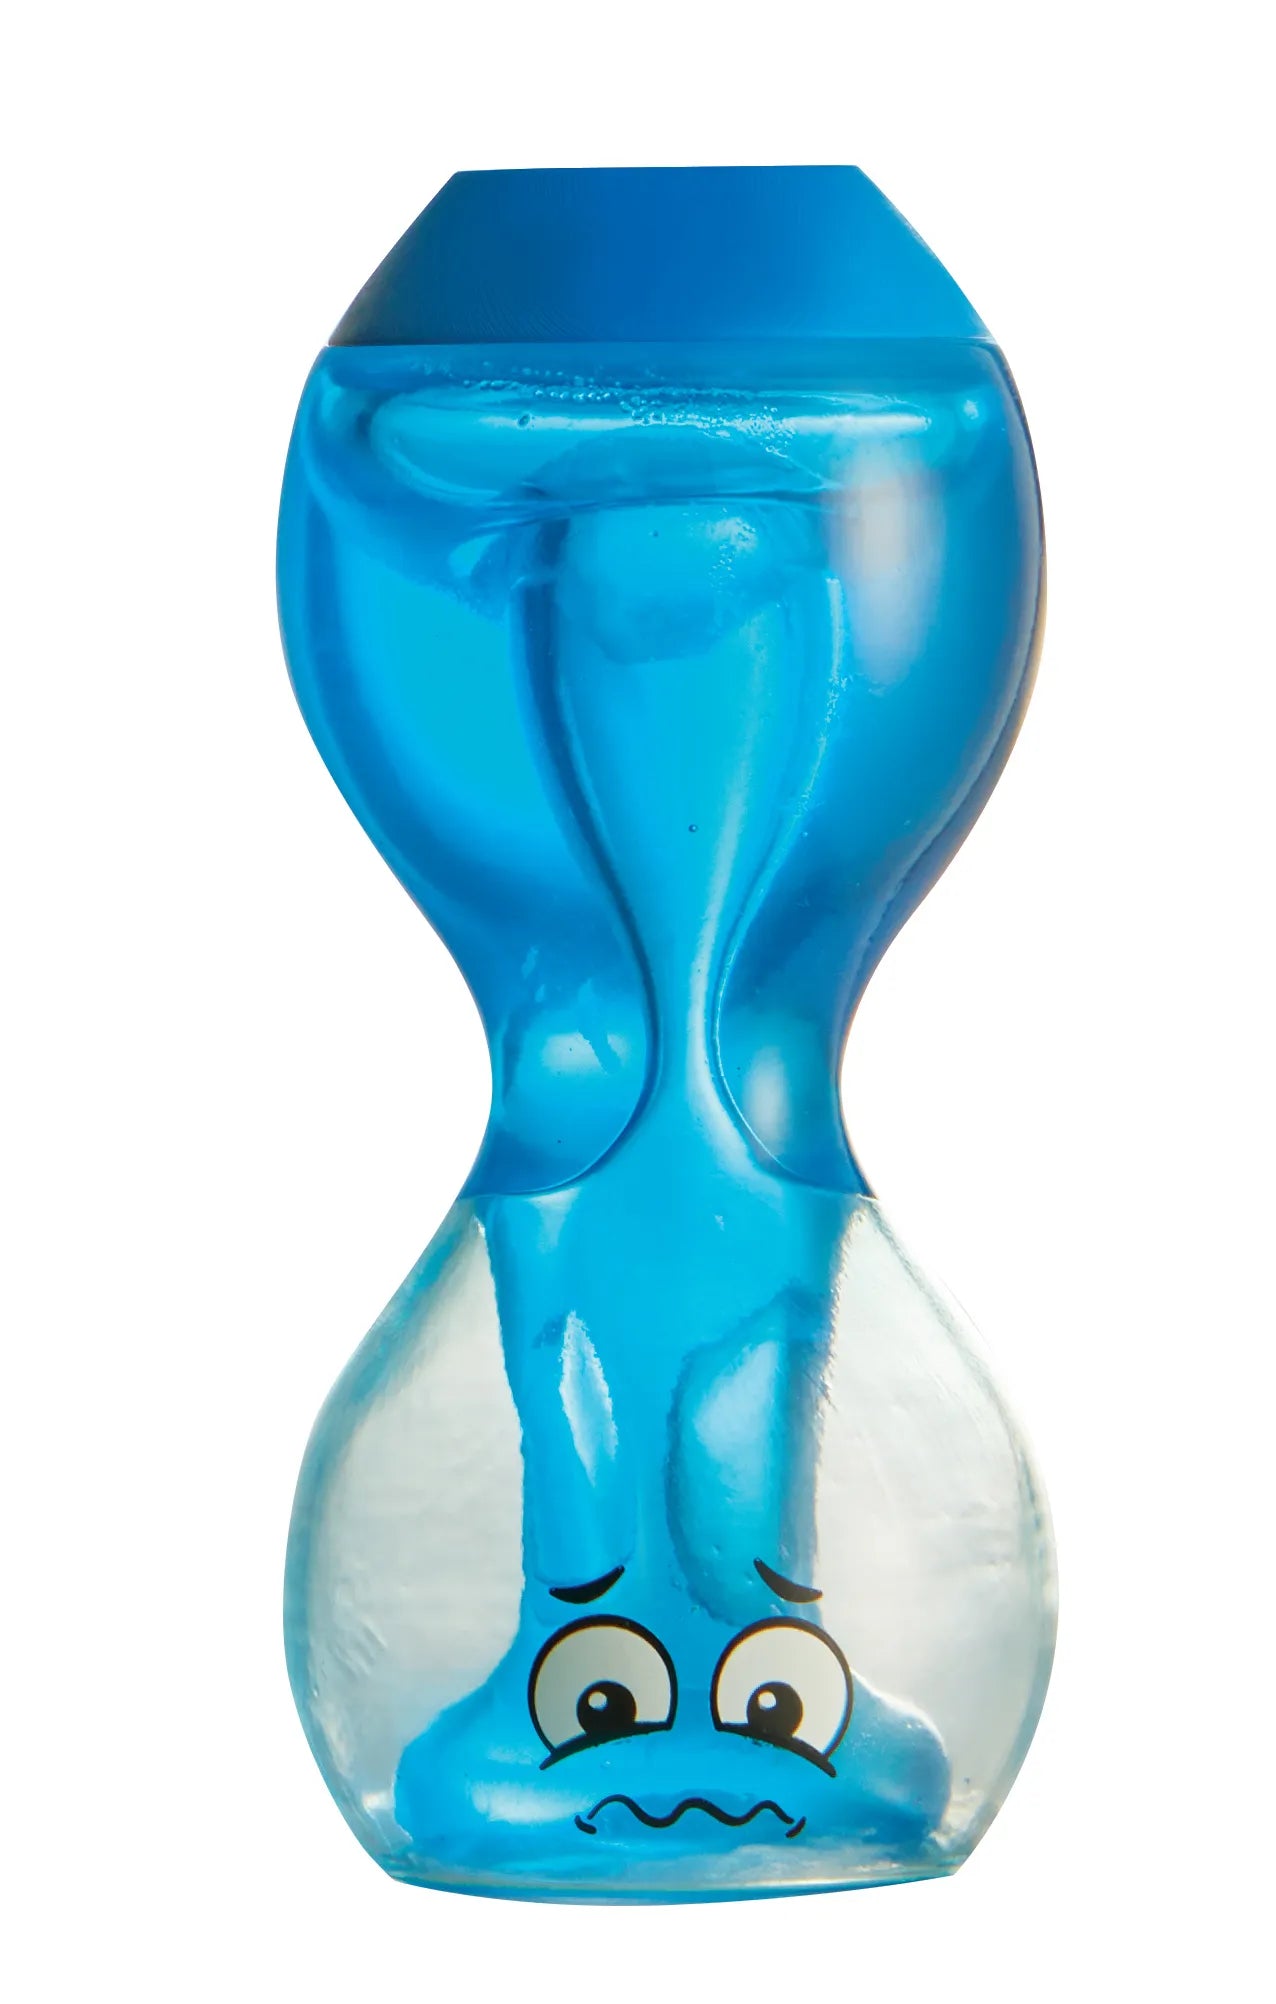 The blue sad drippy Express Your Feelings Sensory Bottle.